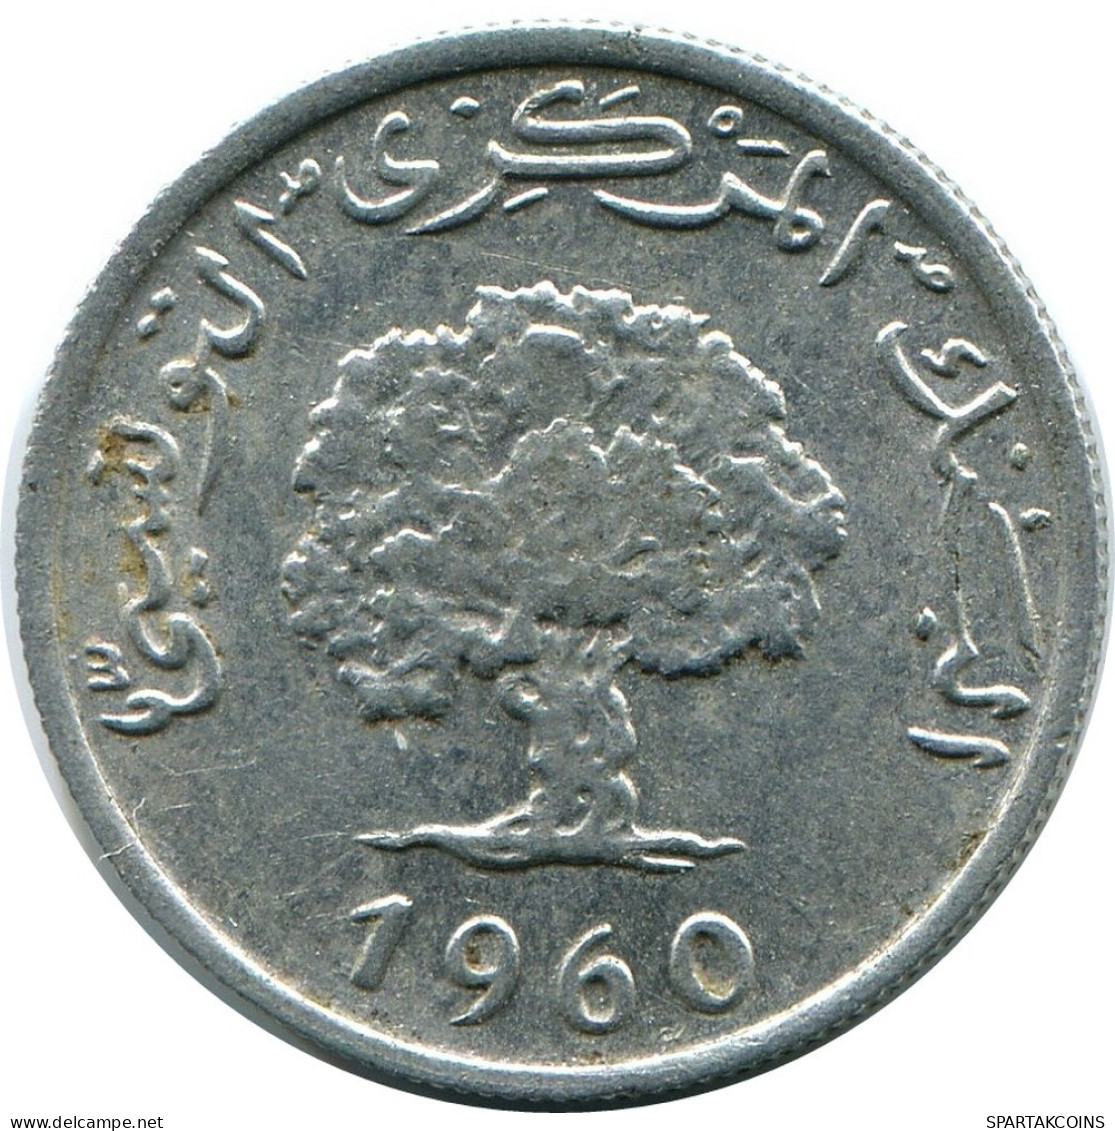 1 MILLIEME 1960 TUNISIA Coin #AP472.U.A - Tunesië